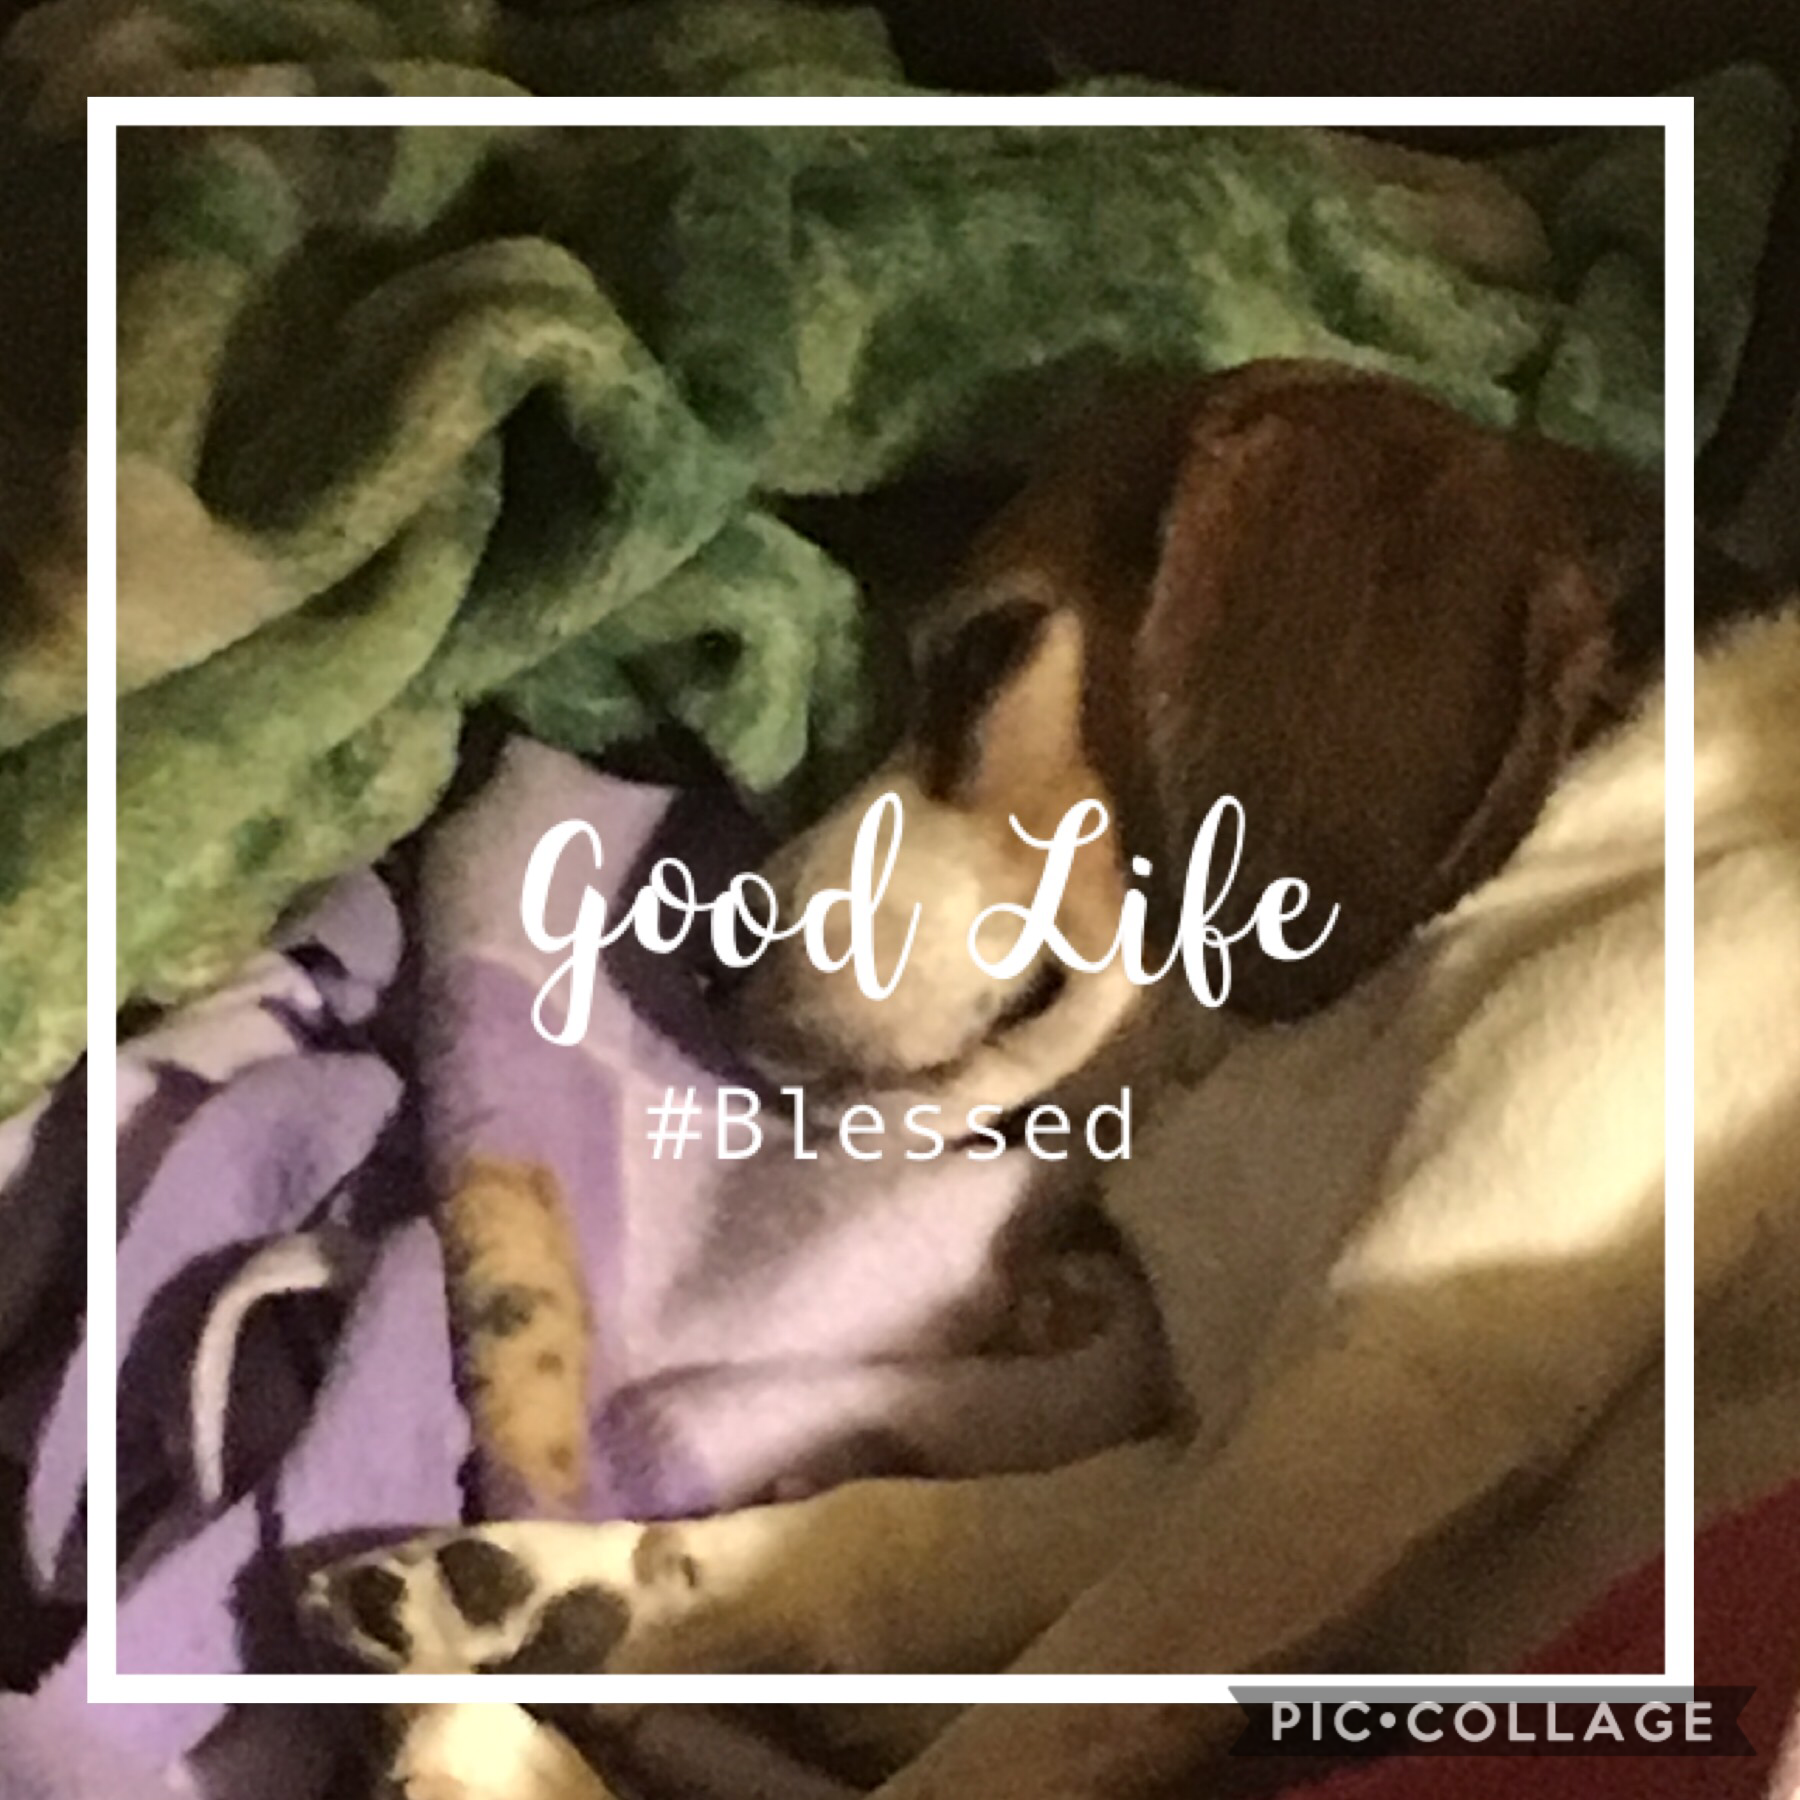 My little Jack Russell/ Beagle doggo, sweetie pie